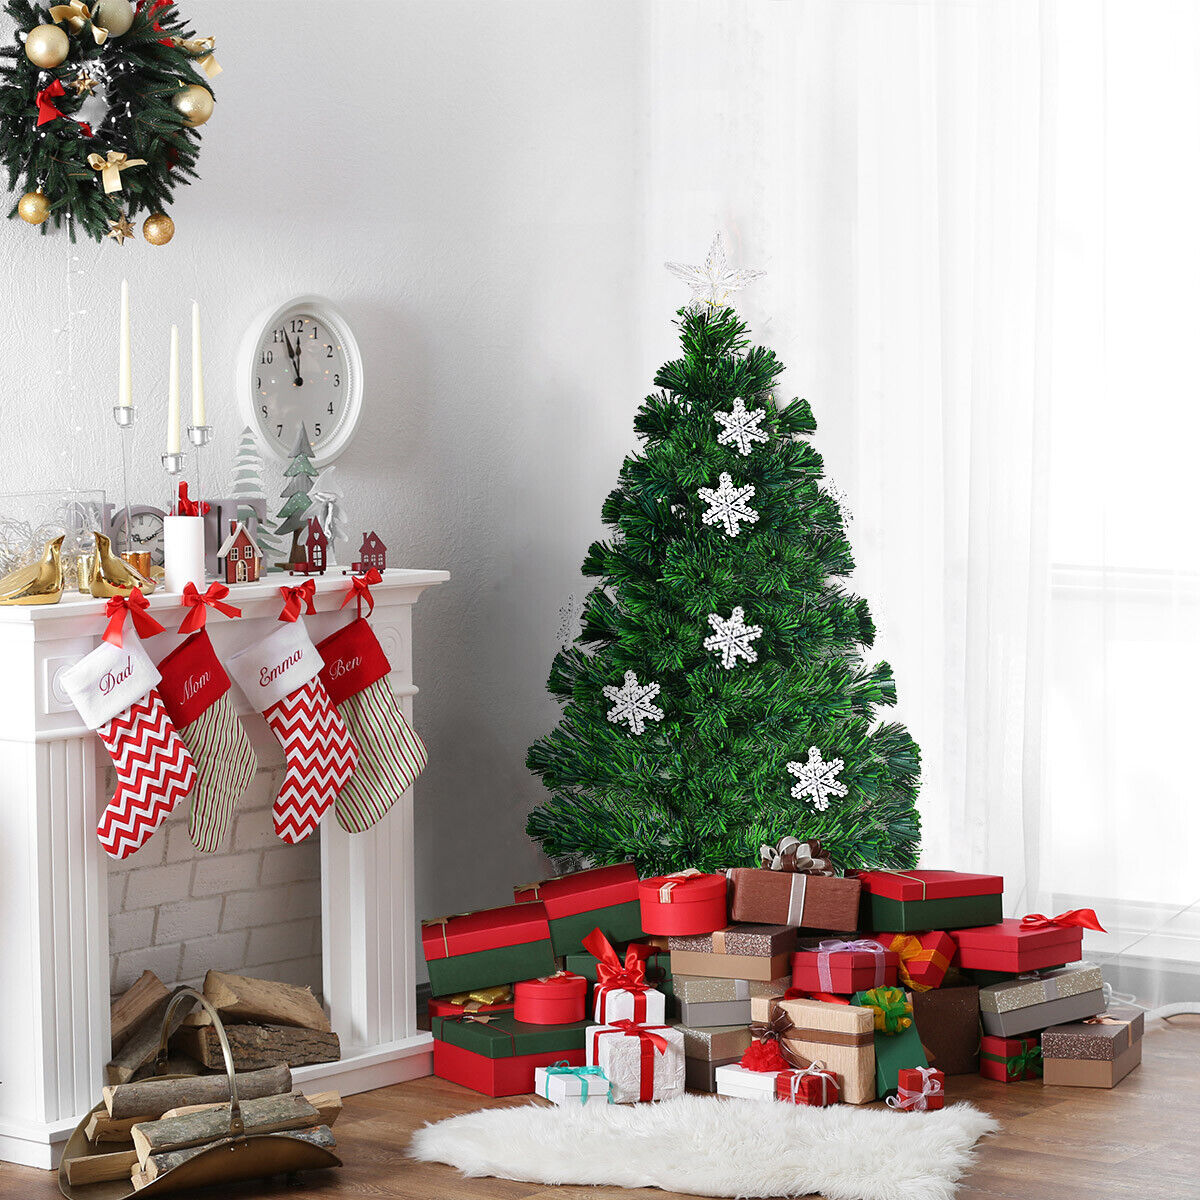 3-Foot Mini Pre-lit Christmas Tree With Multicolor Fiber Optic Lights